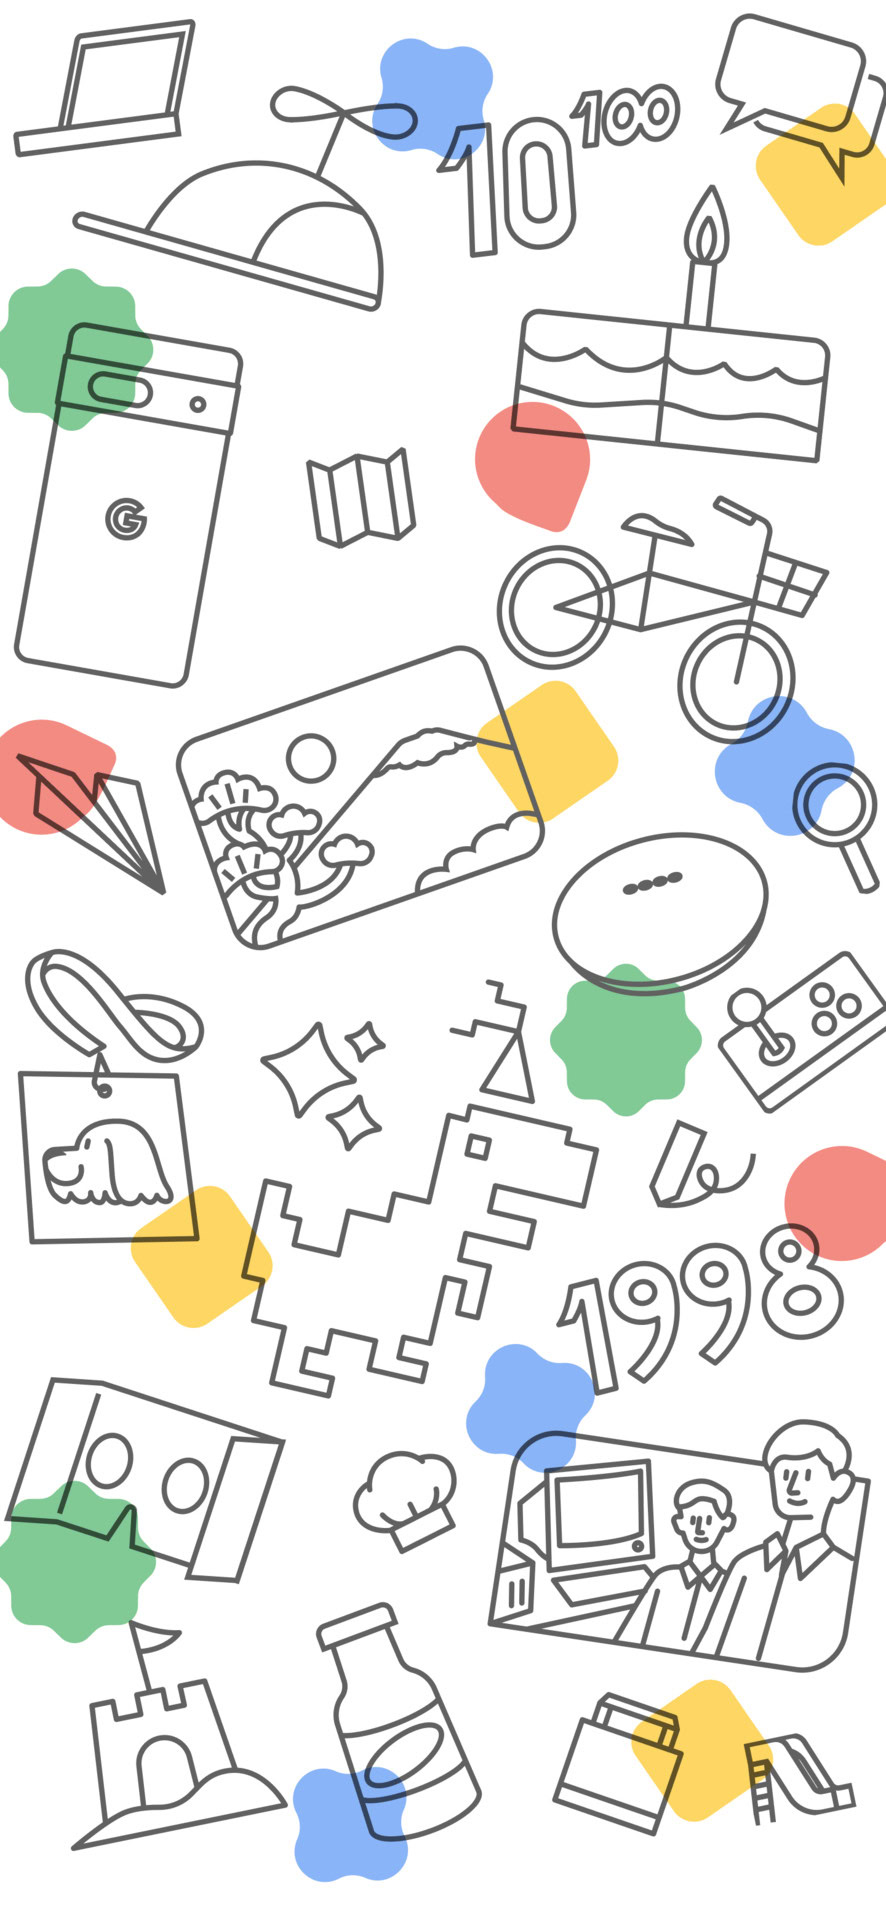 Google Wallpaper 25th Anniversary 2